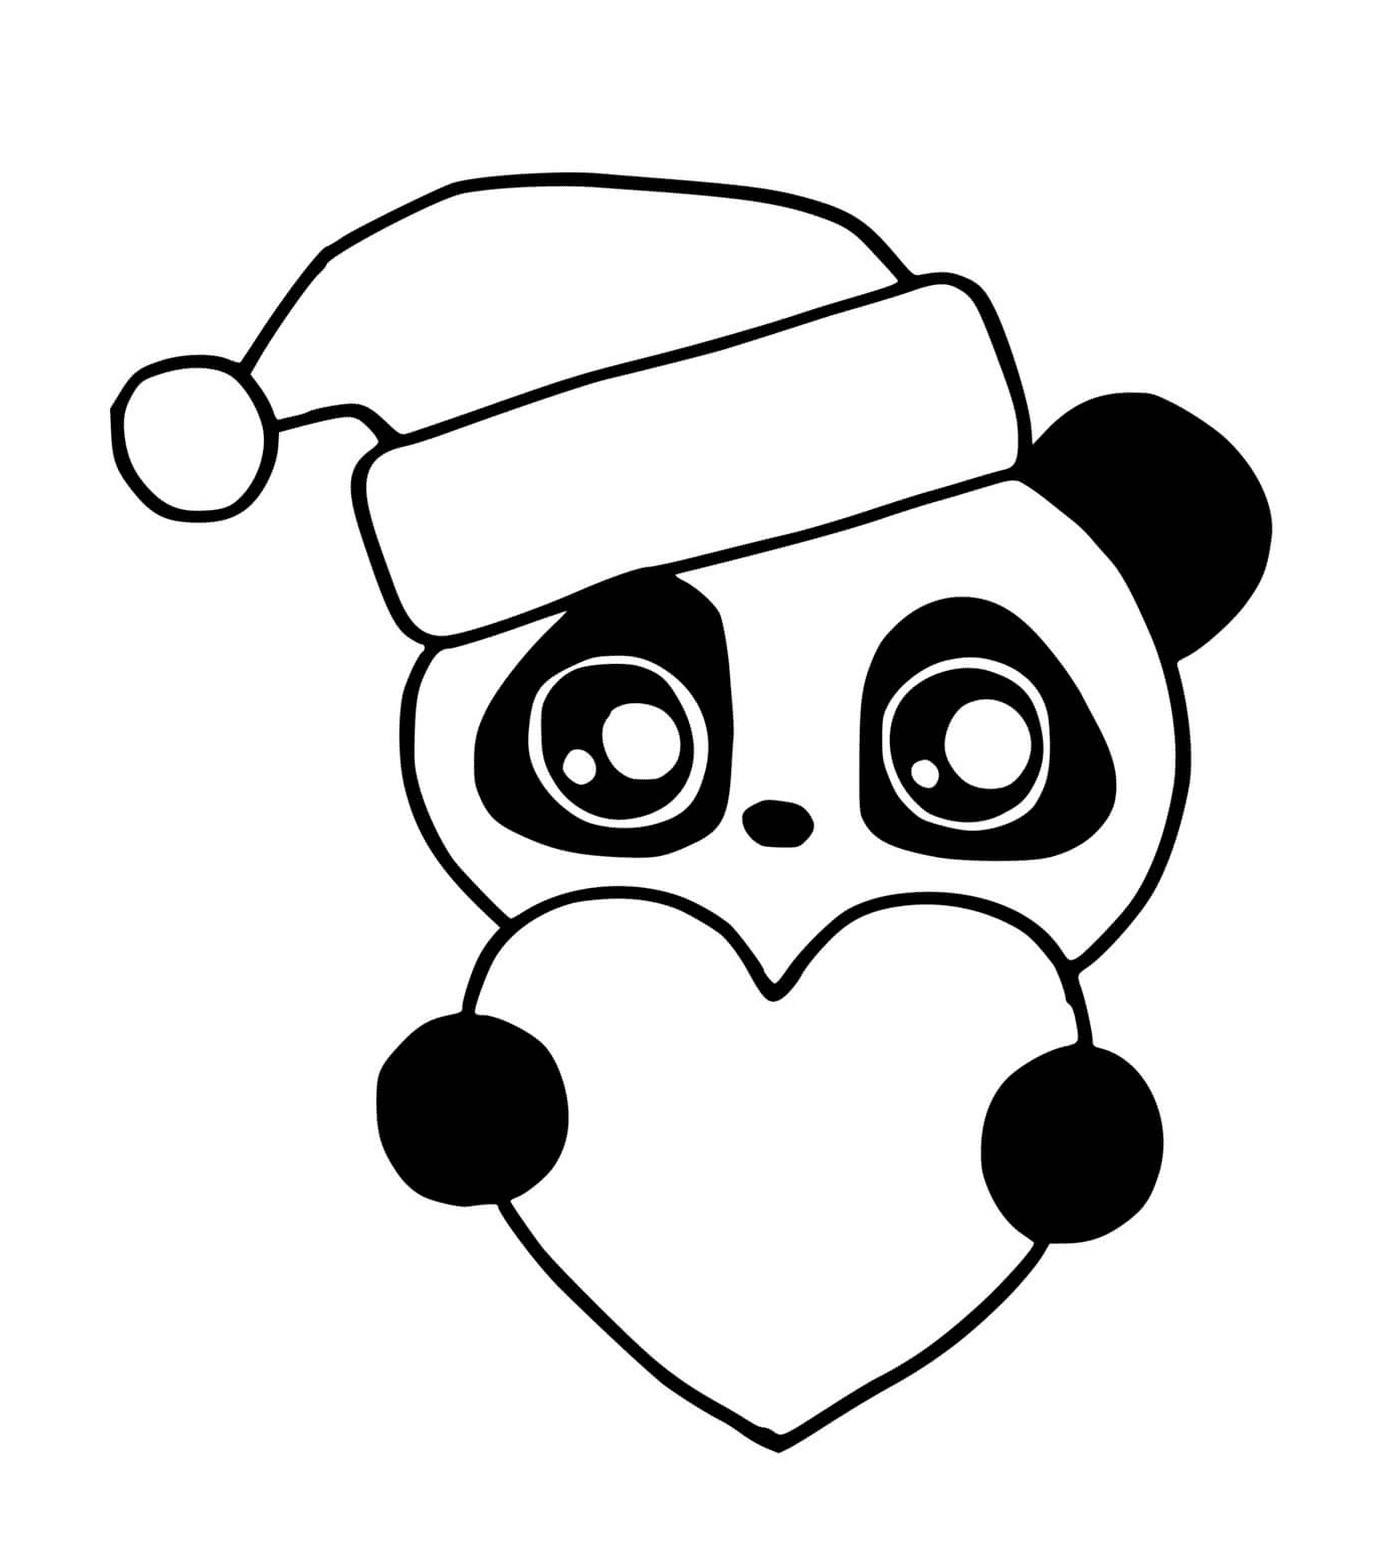  A cute panda wearing a Christmas hat 